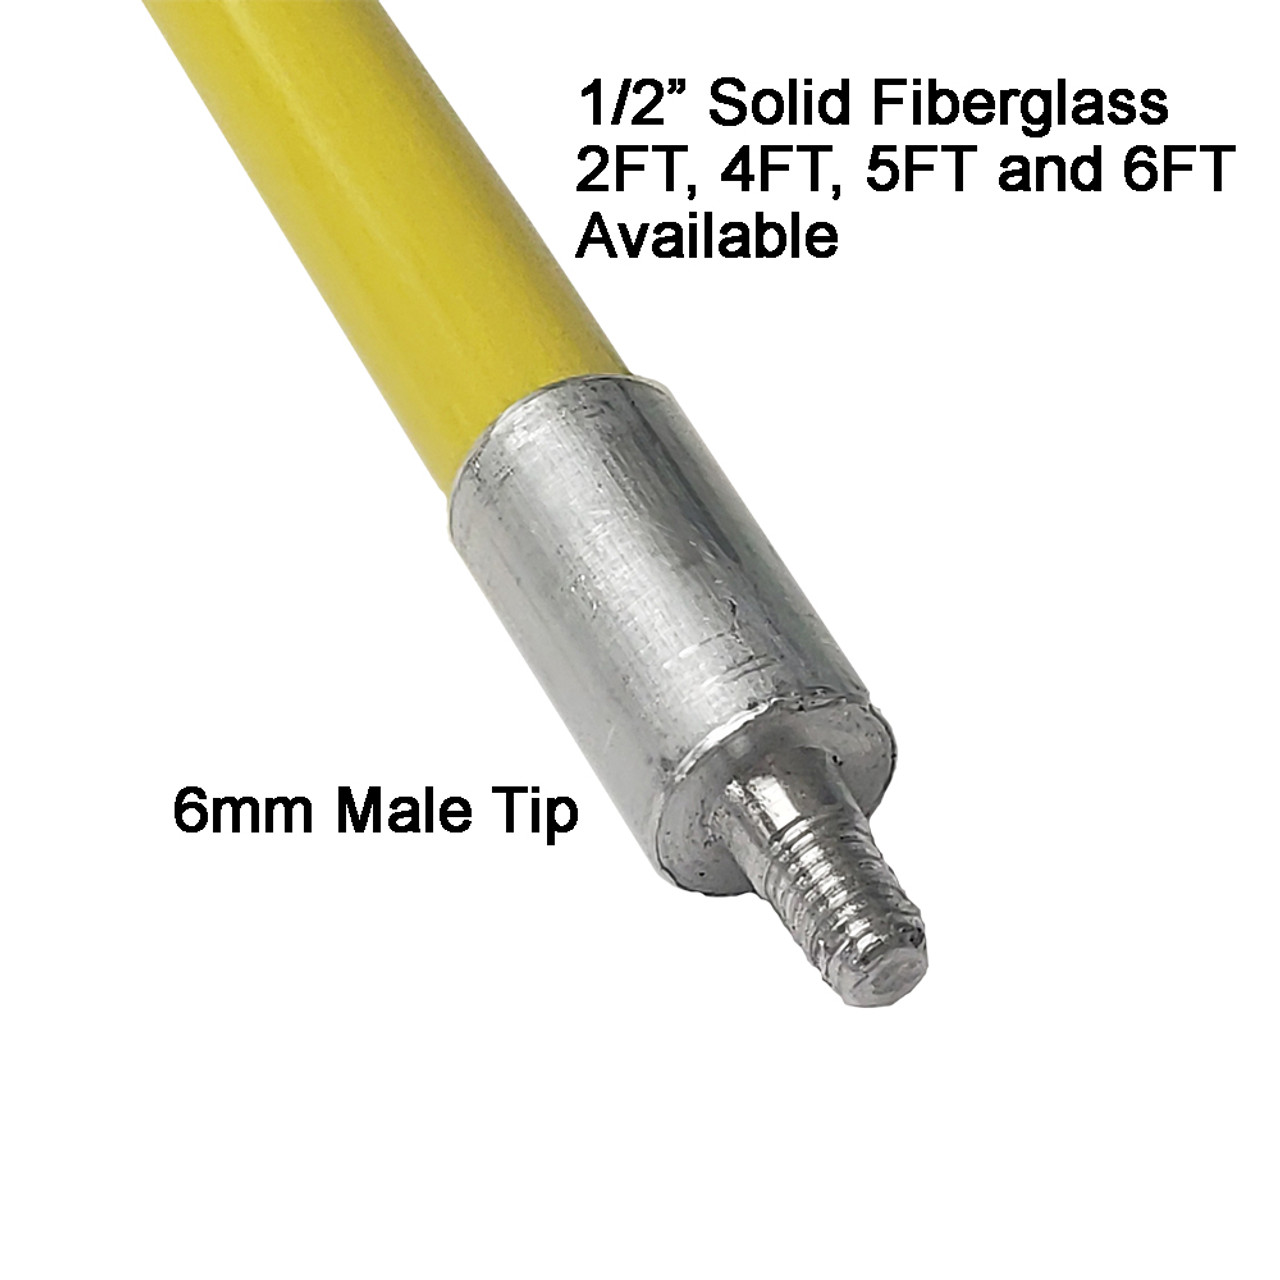 5FT. Fiberglass Pole Spear